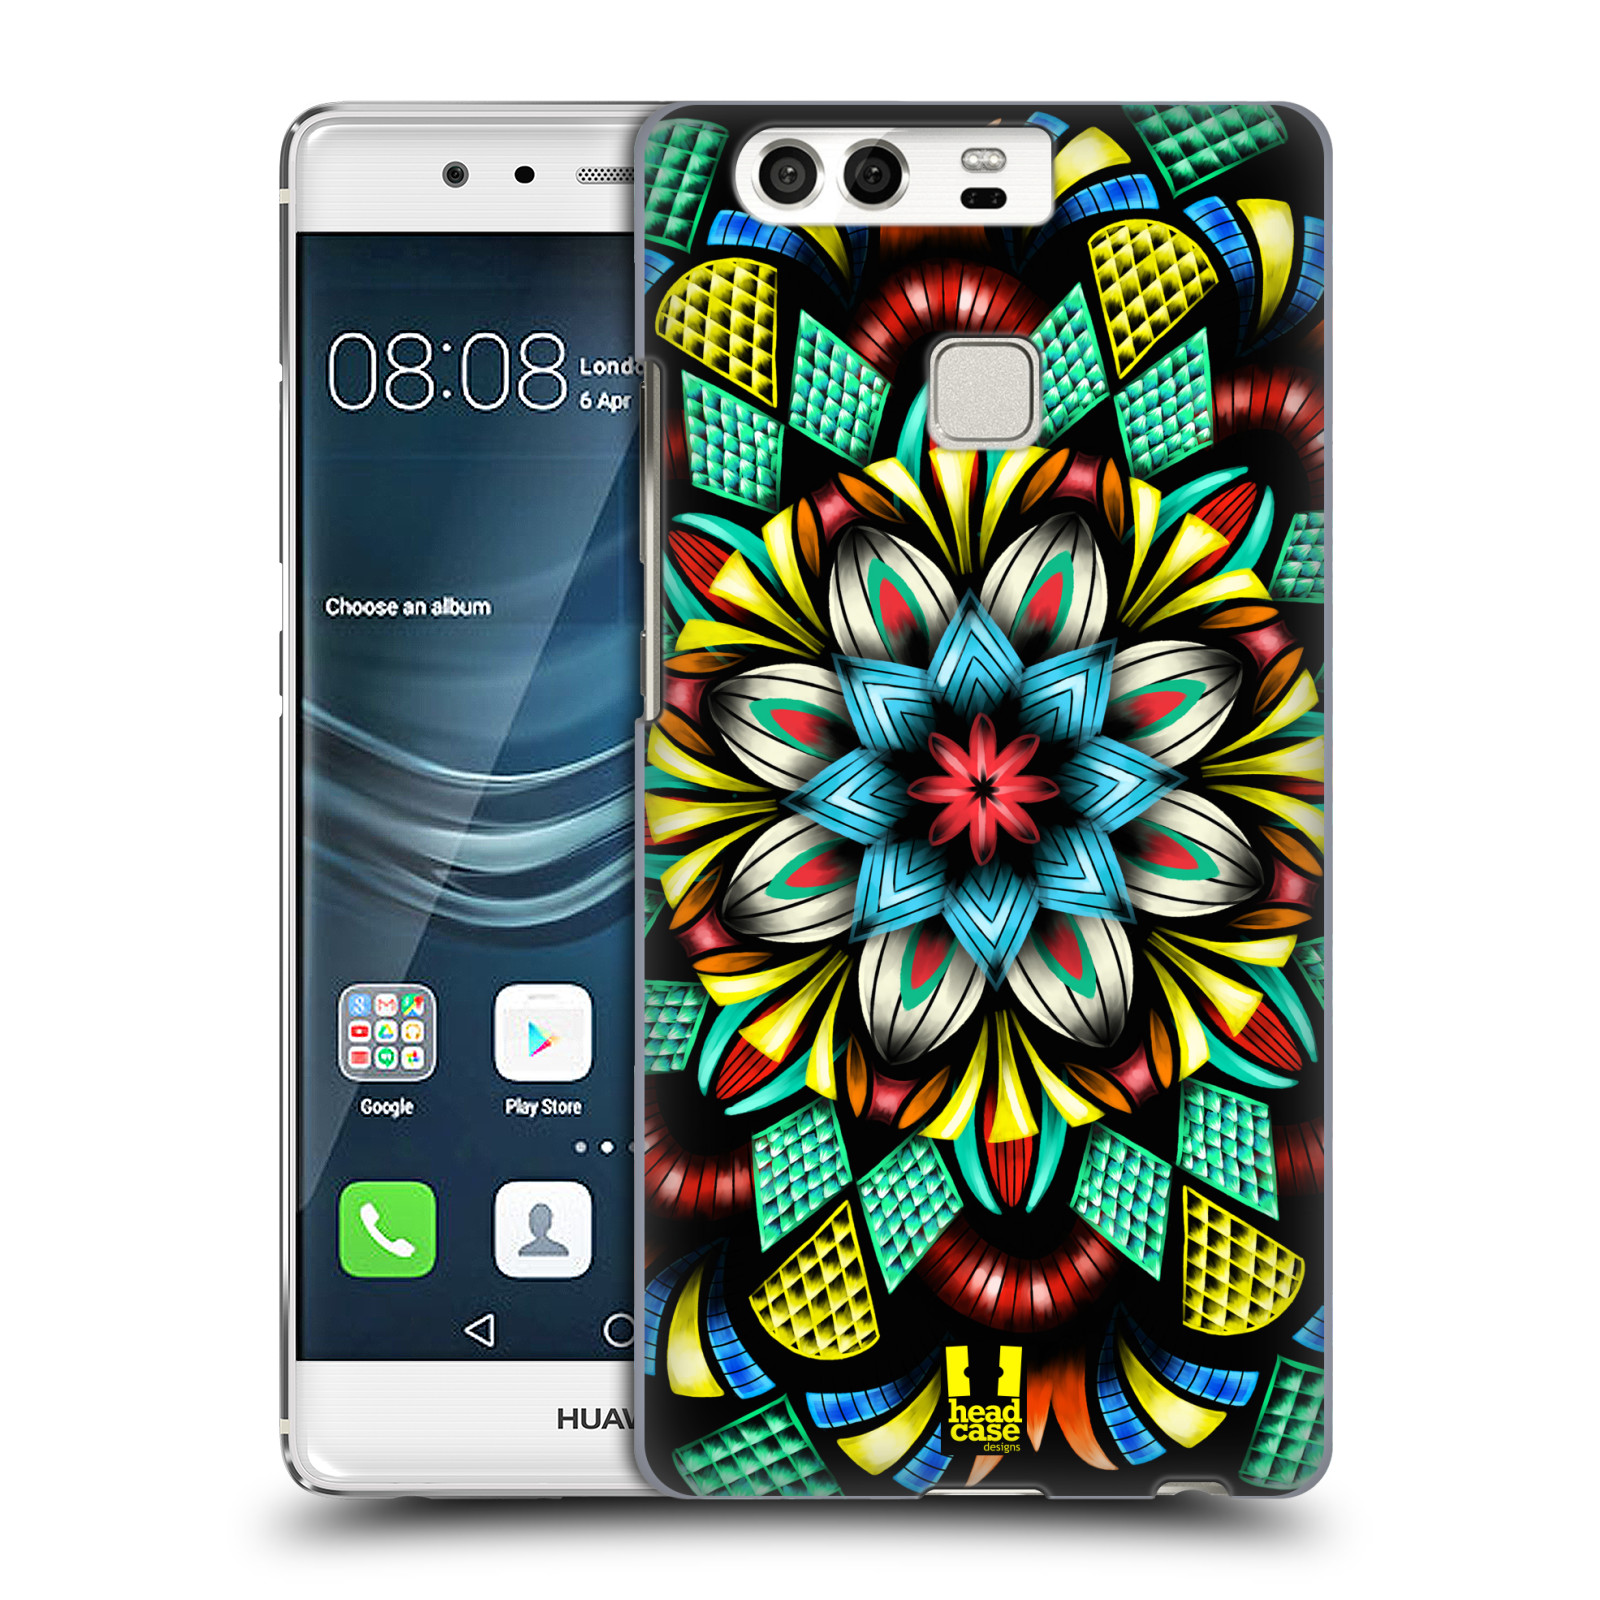 HEAD CASE plastový obal na mobil Huawei P9 / P9 DUAL SIM vzor Indie Mandala kaleidoskop barevný vzor TRADIČNÍ